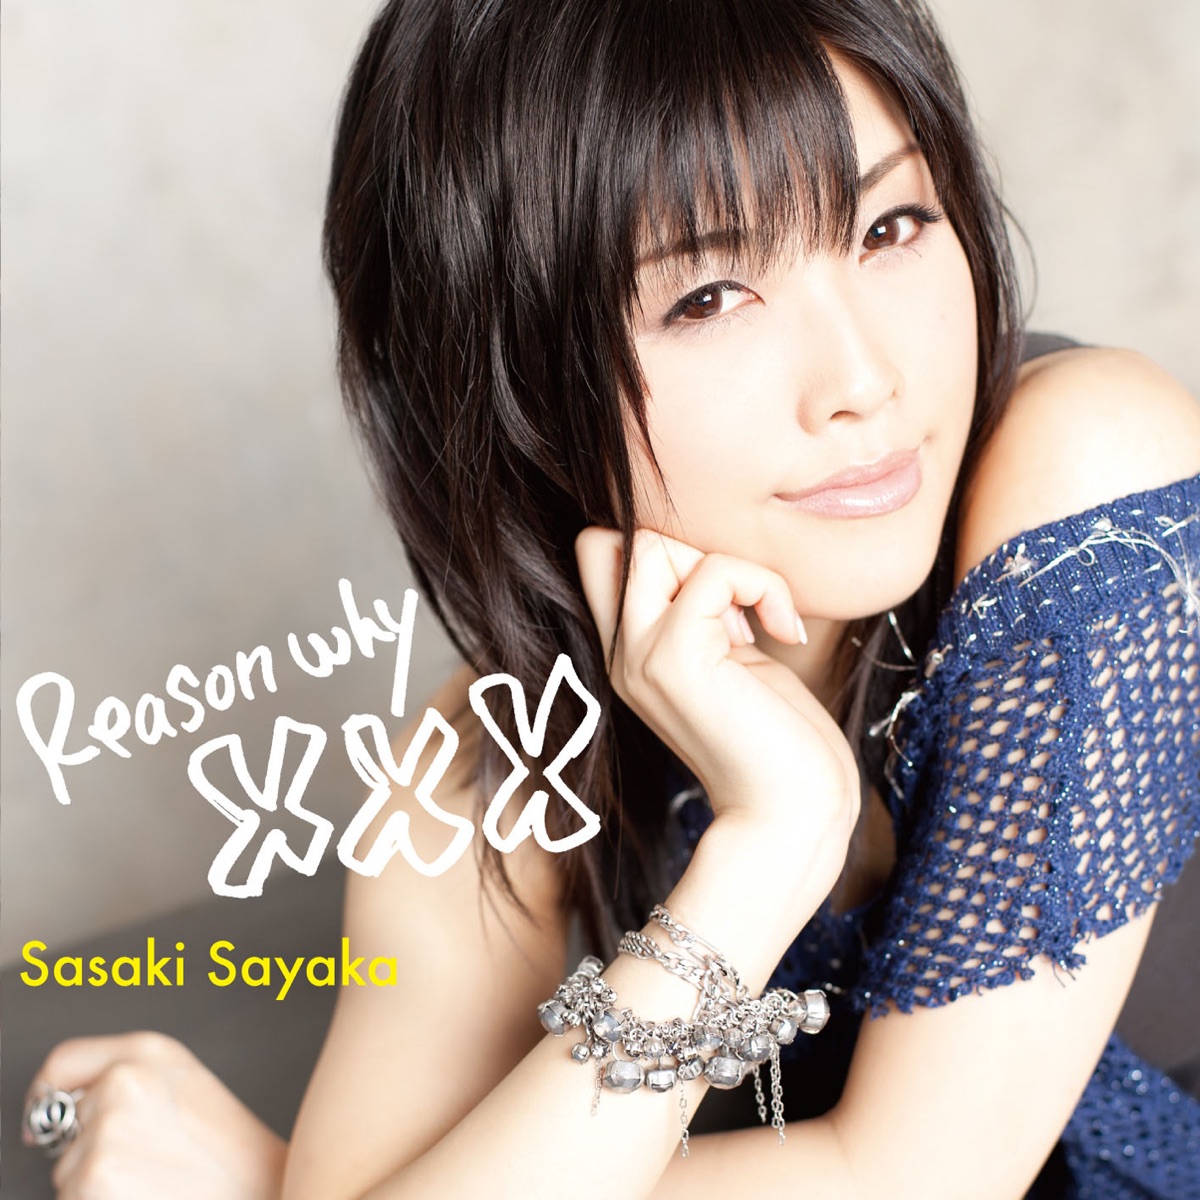 Cover art for『Sayaka Sasaki - Reason why XXX』from the release『Reason why XXX』